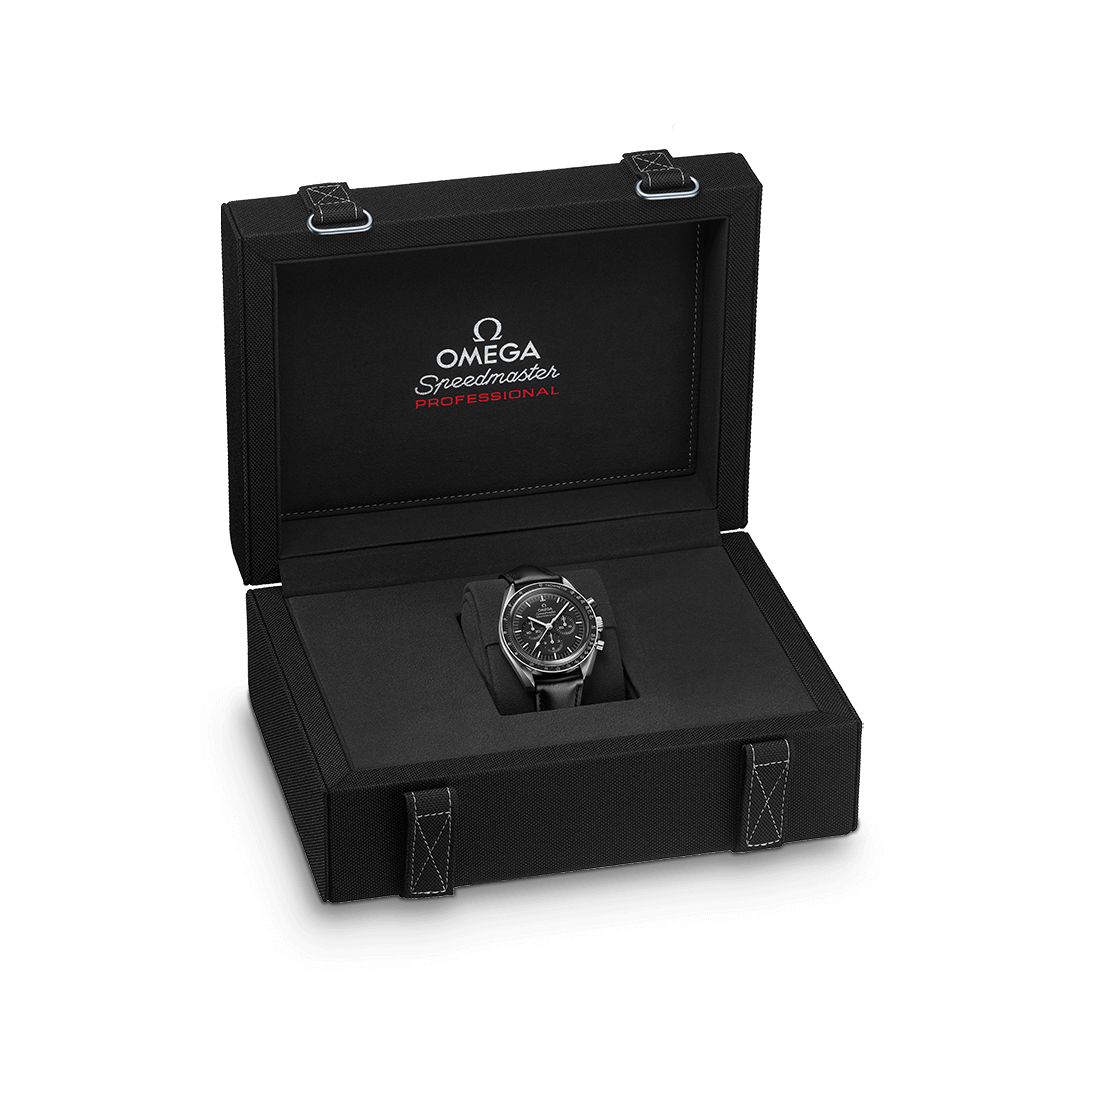 OMEGA Speedmaster Moonwatch Professional Master Chronometer Chronograph 42mm, model #310.32.42.50.01.002, at IJL Since 1937